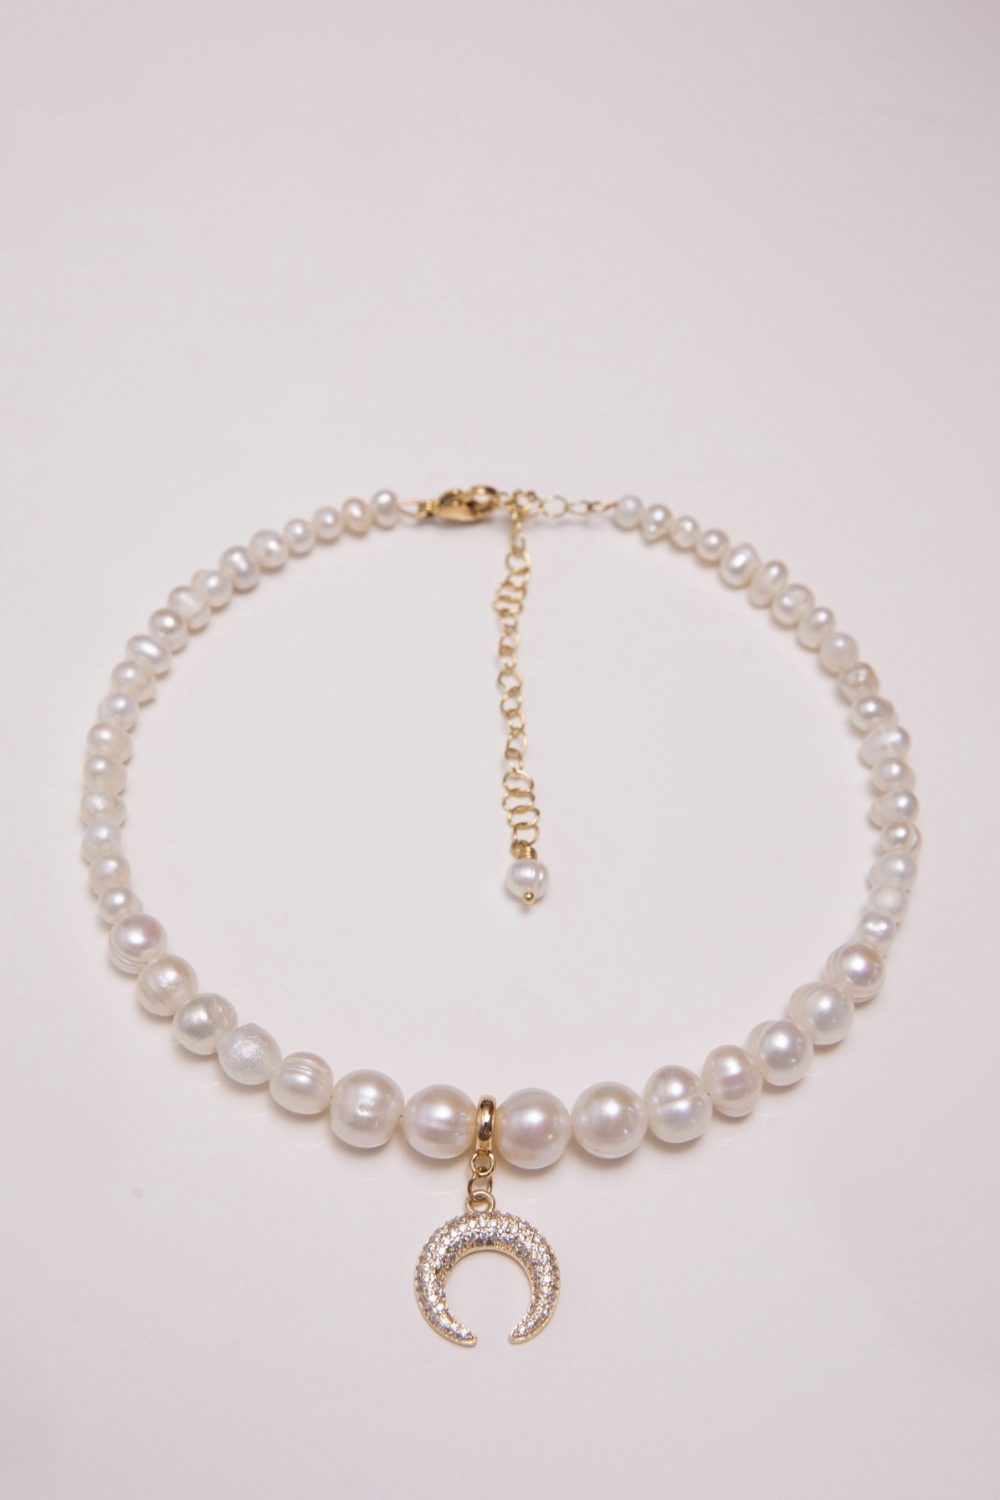 Náhrdelník s perlami a měsícem (Grains de Verre) CHMP2